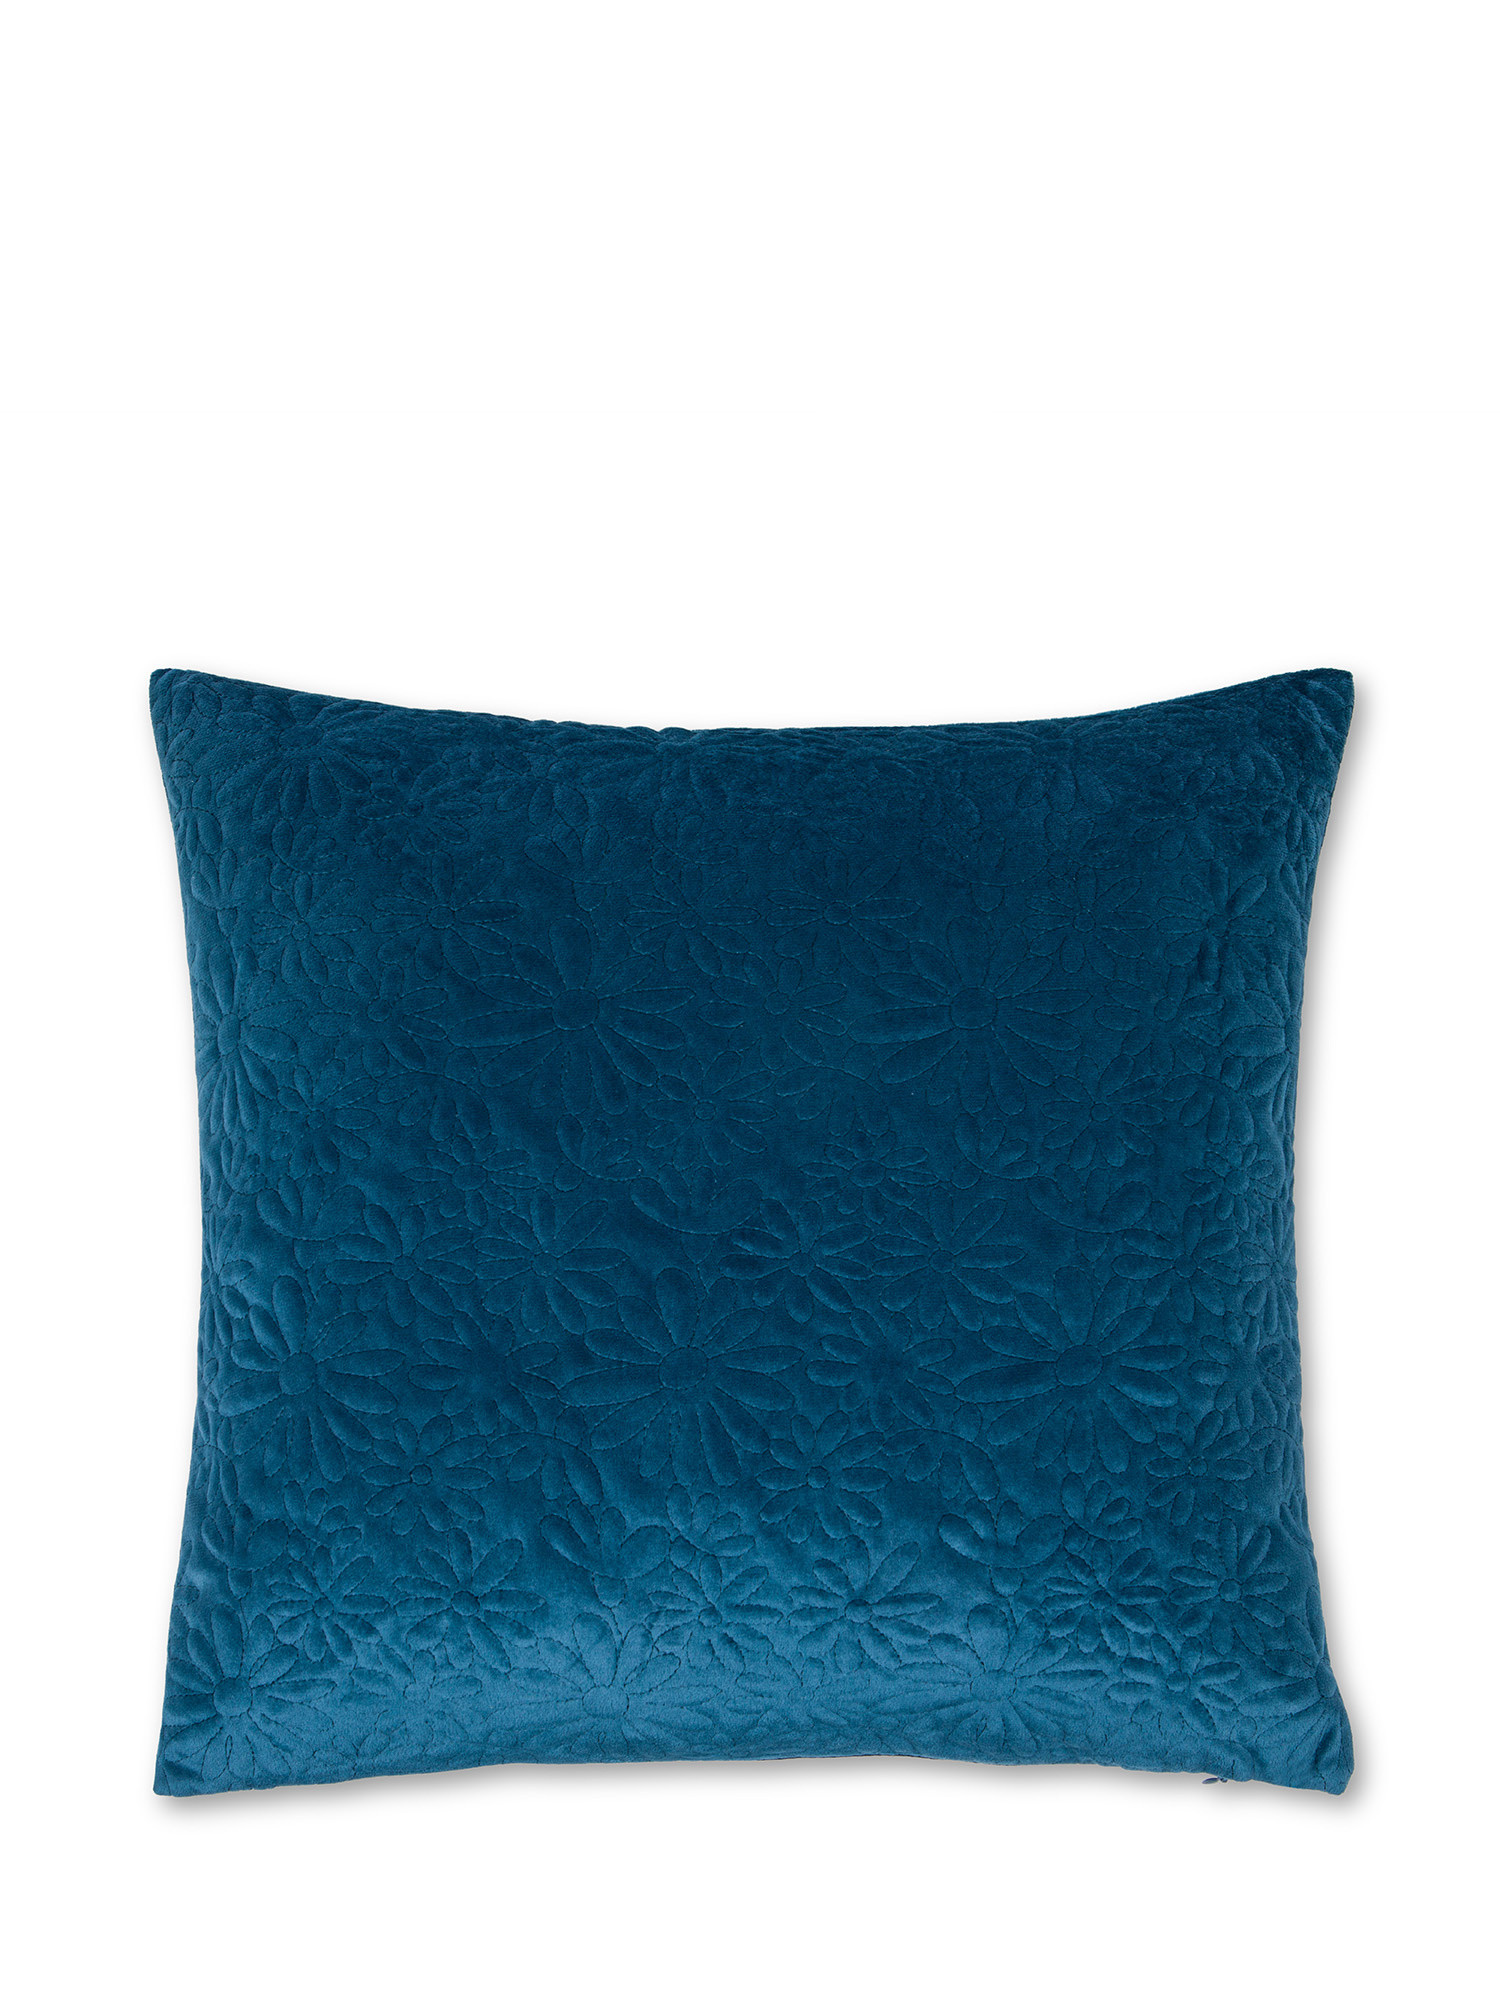 Solid color quilt velvet cushion 45X45cm, Blue, large image number 0